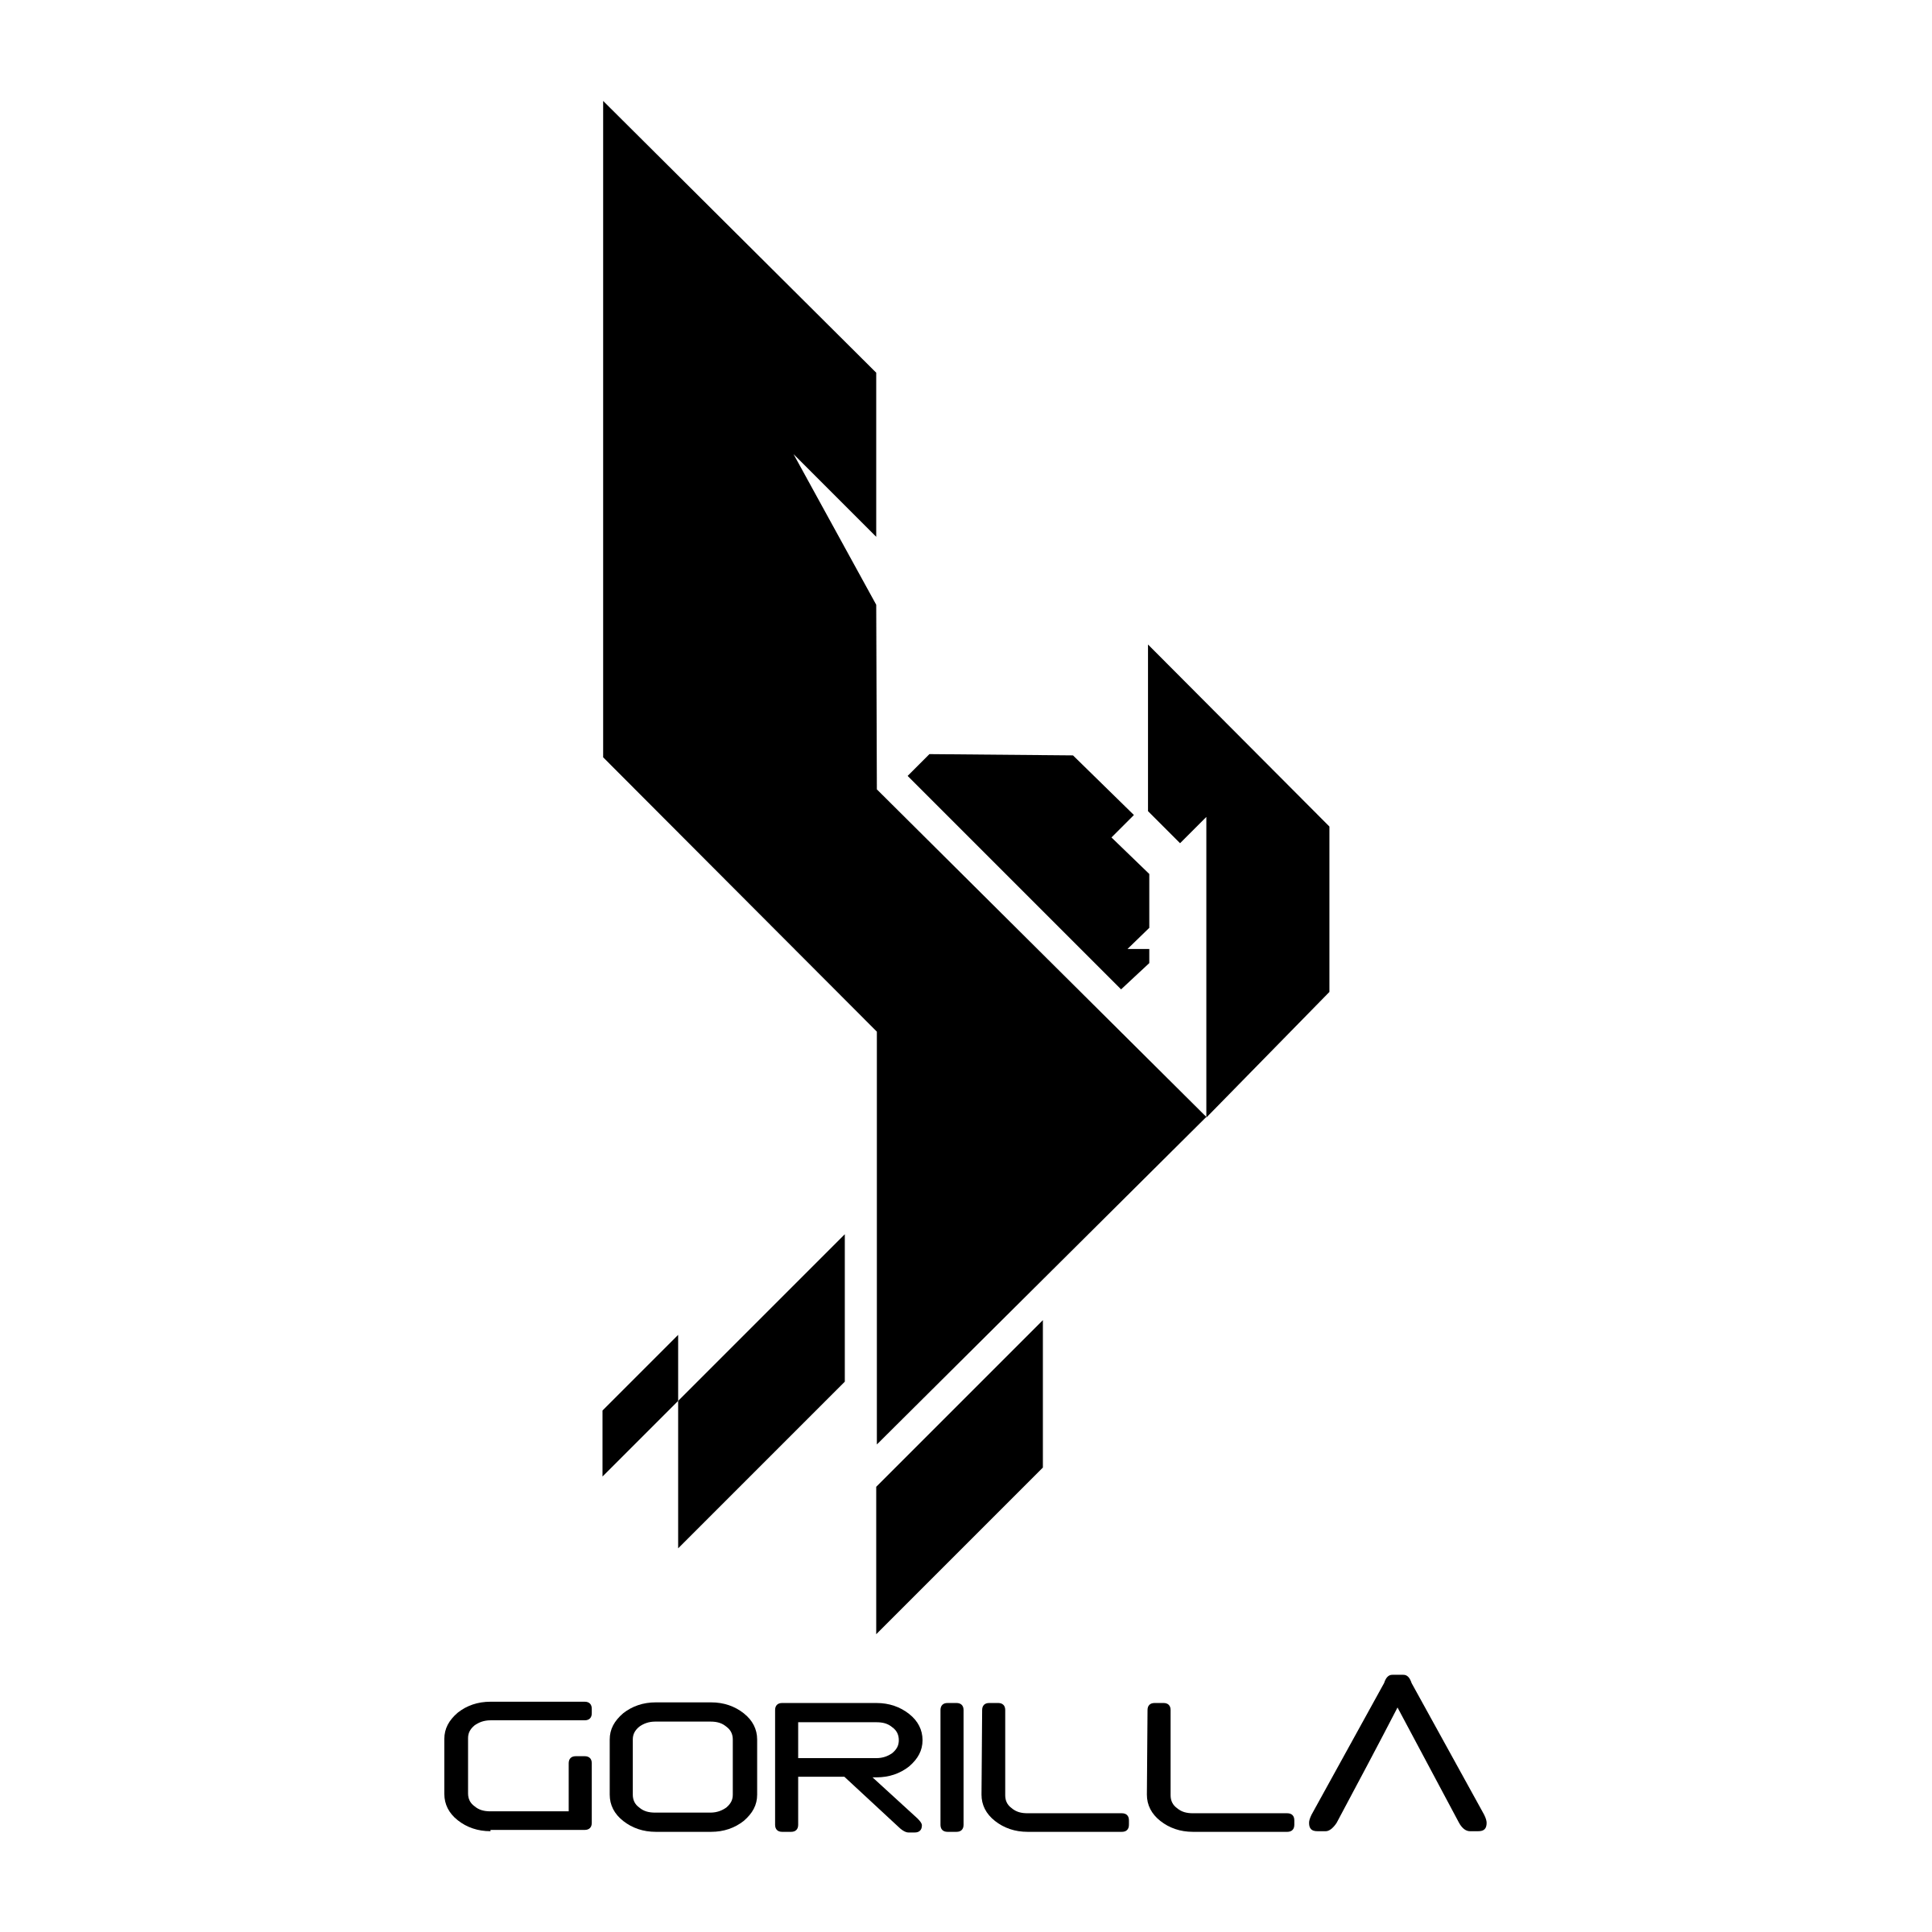 Gorilla Logo - Gorilla Logo PNG Transparent & SVG Vector - Freebie Supply